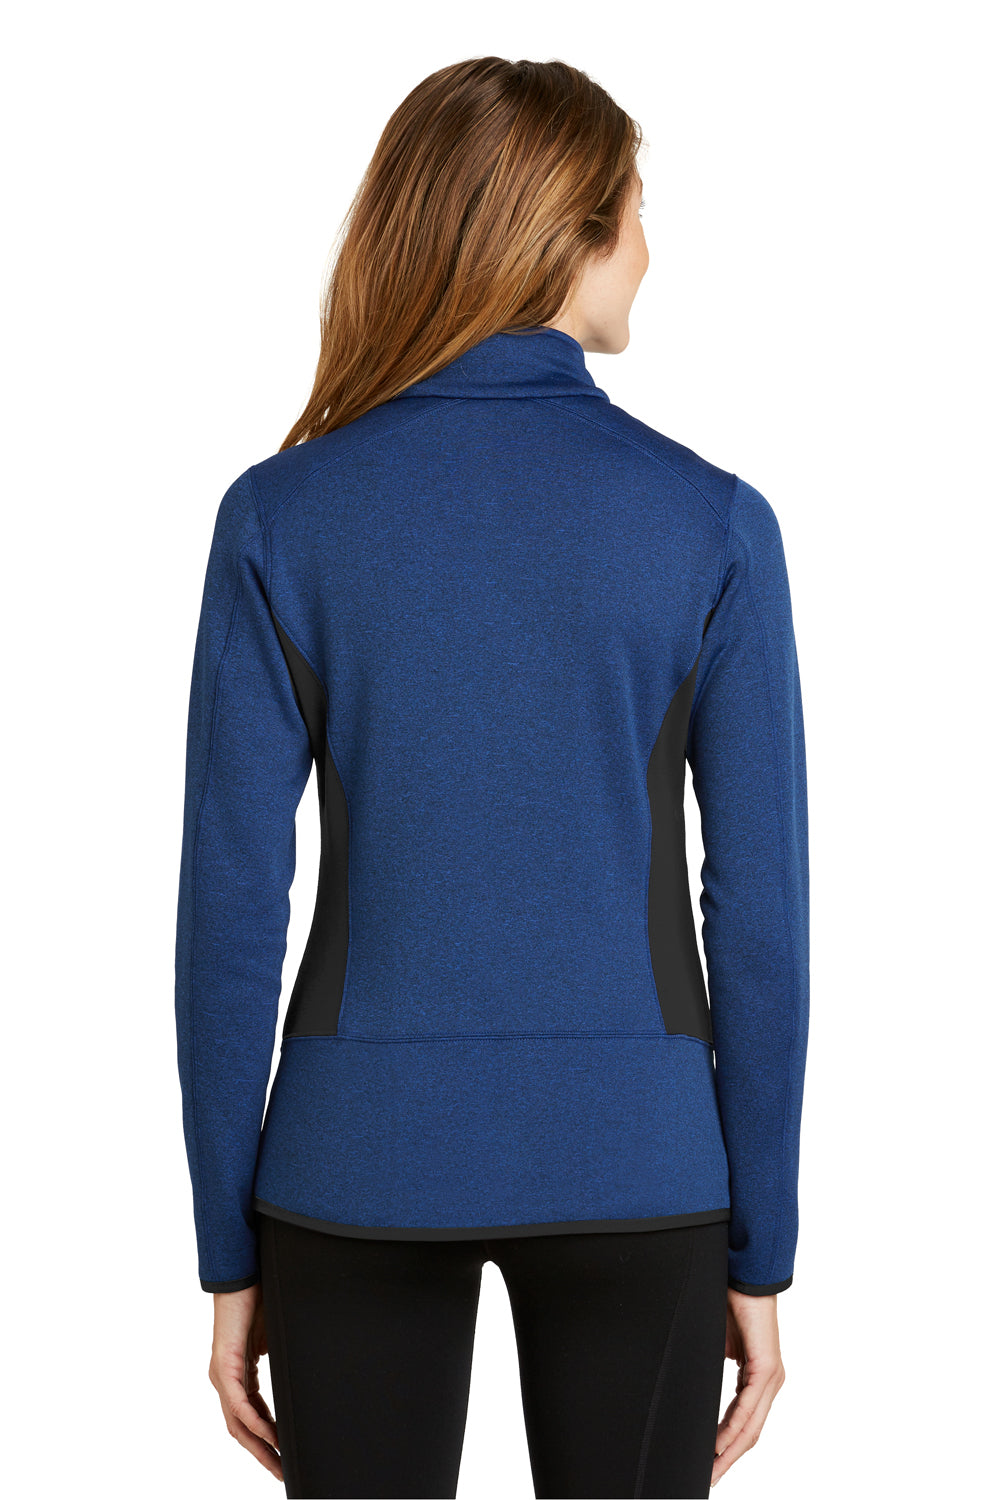 Eddie Bauer EB239 Womens Full Zip Fleece Jacket Heather Blue Model Back